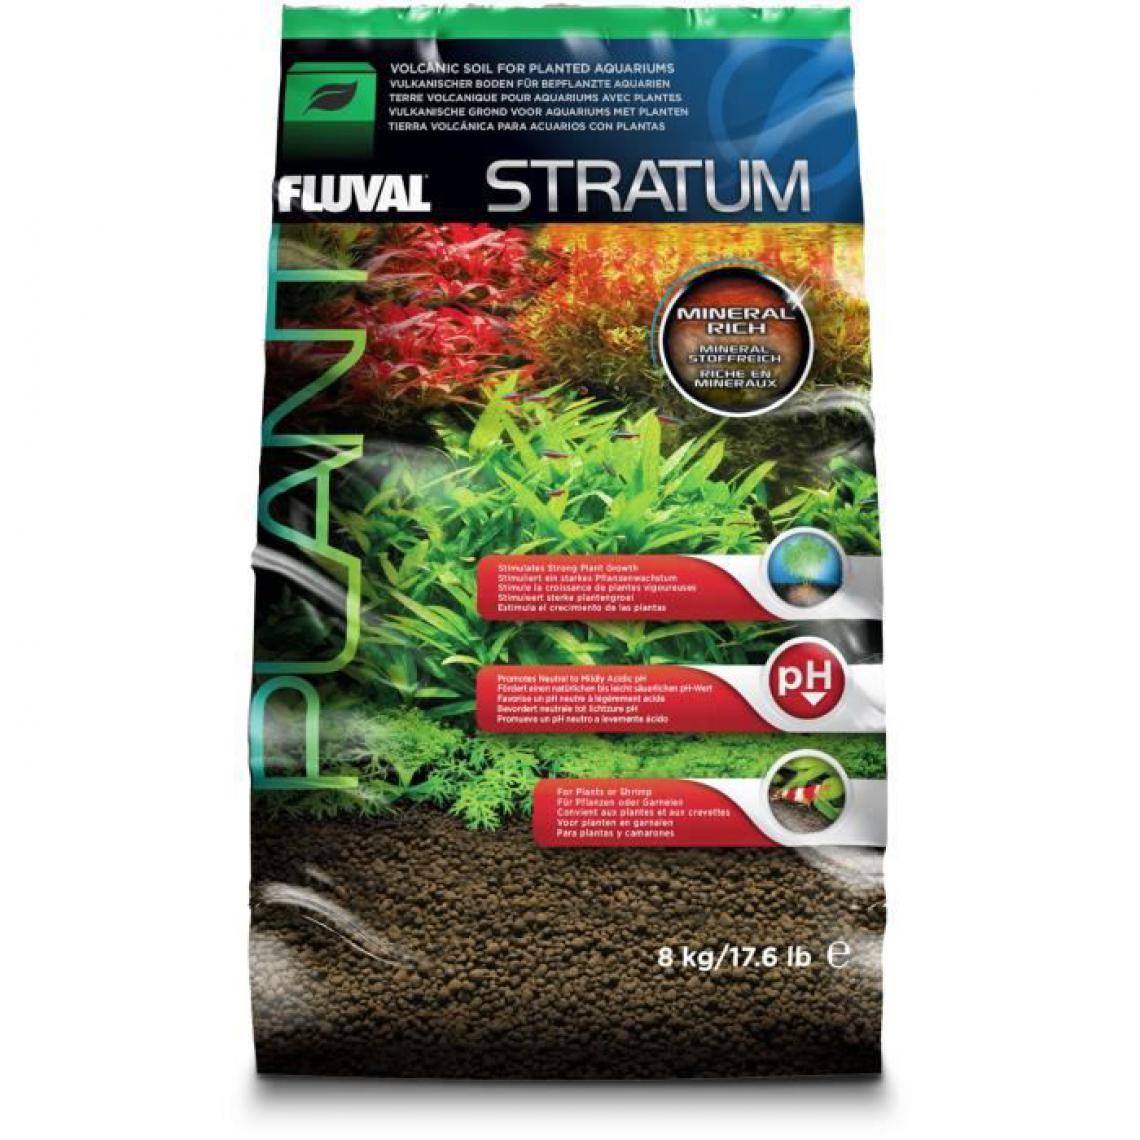 Fluval - Substrat StratumFL plantes/crevet.,8kg - Décoration aquarium